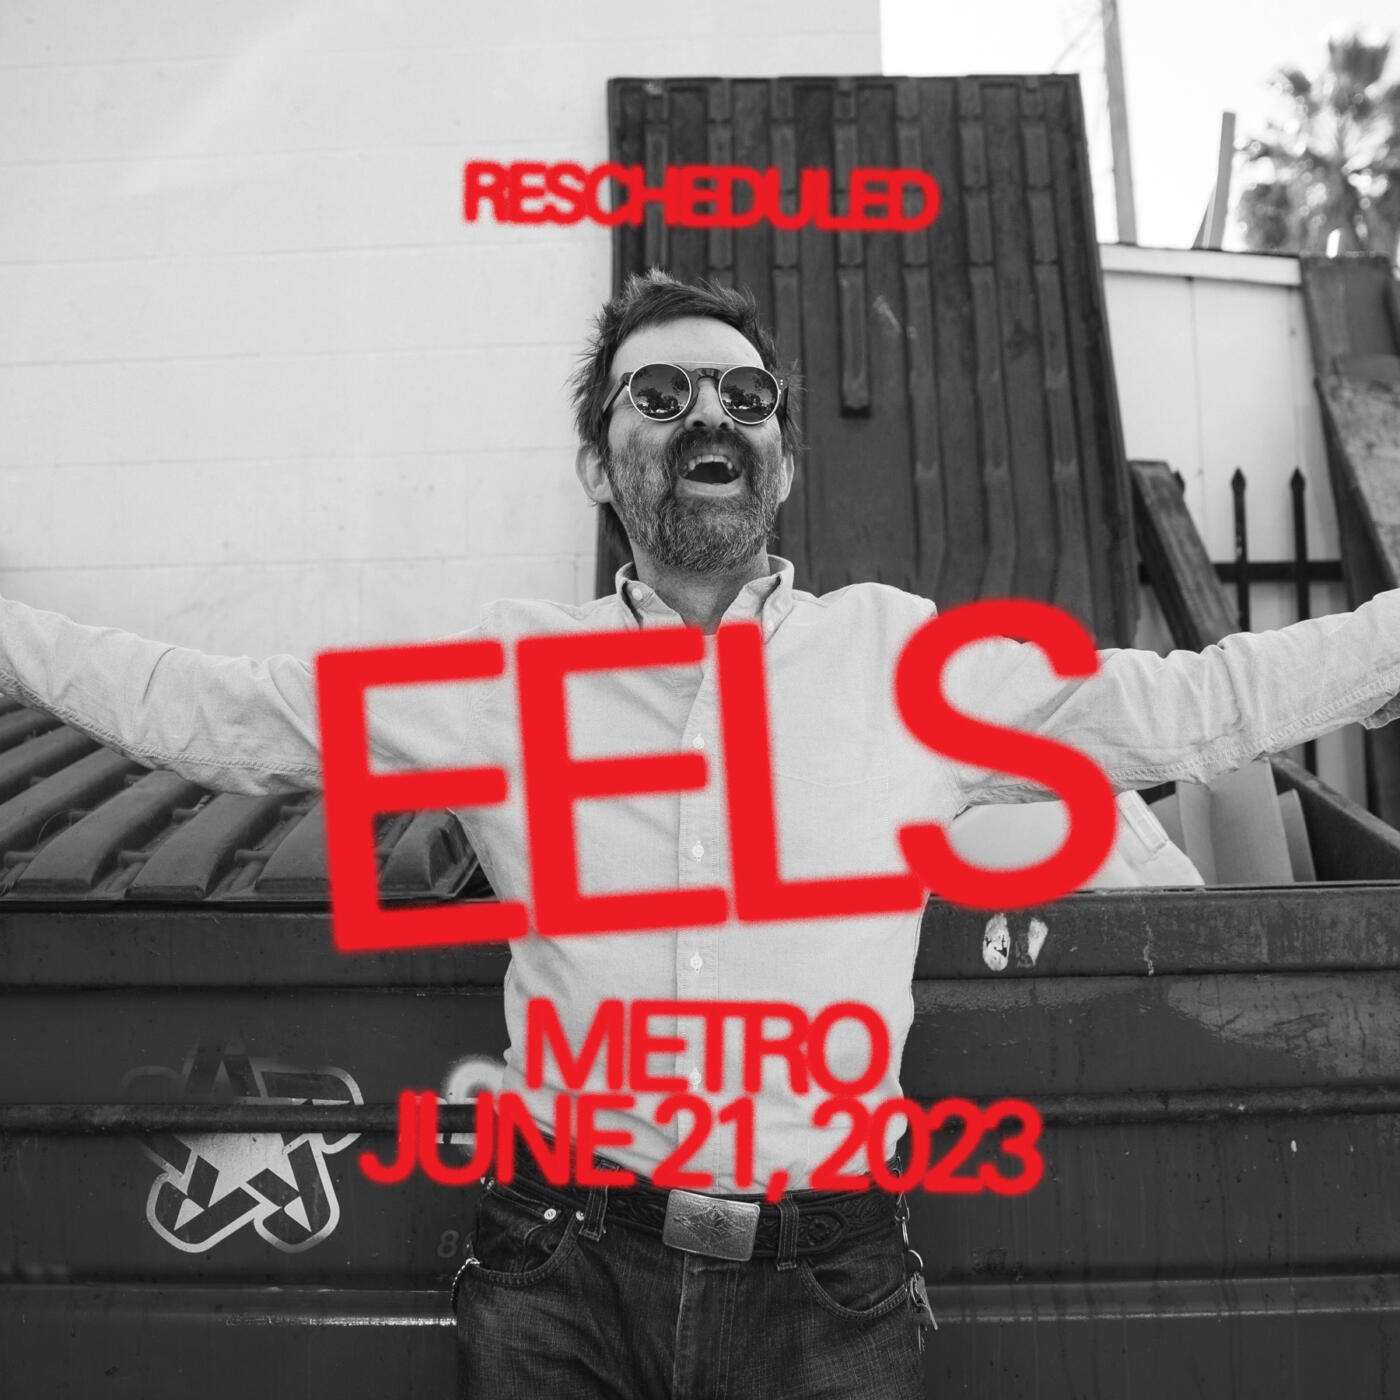 Eels_square